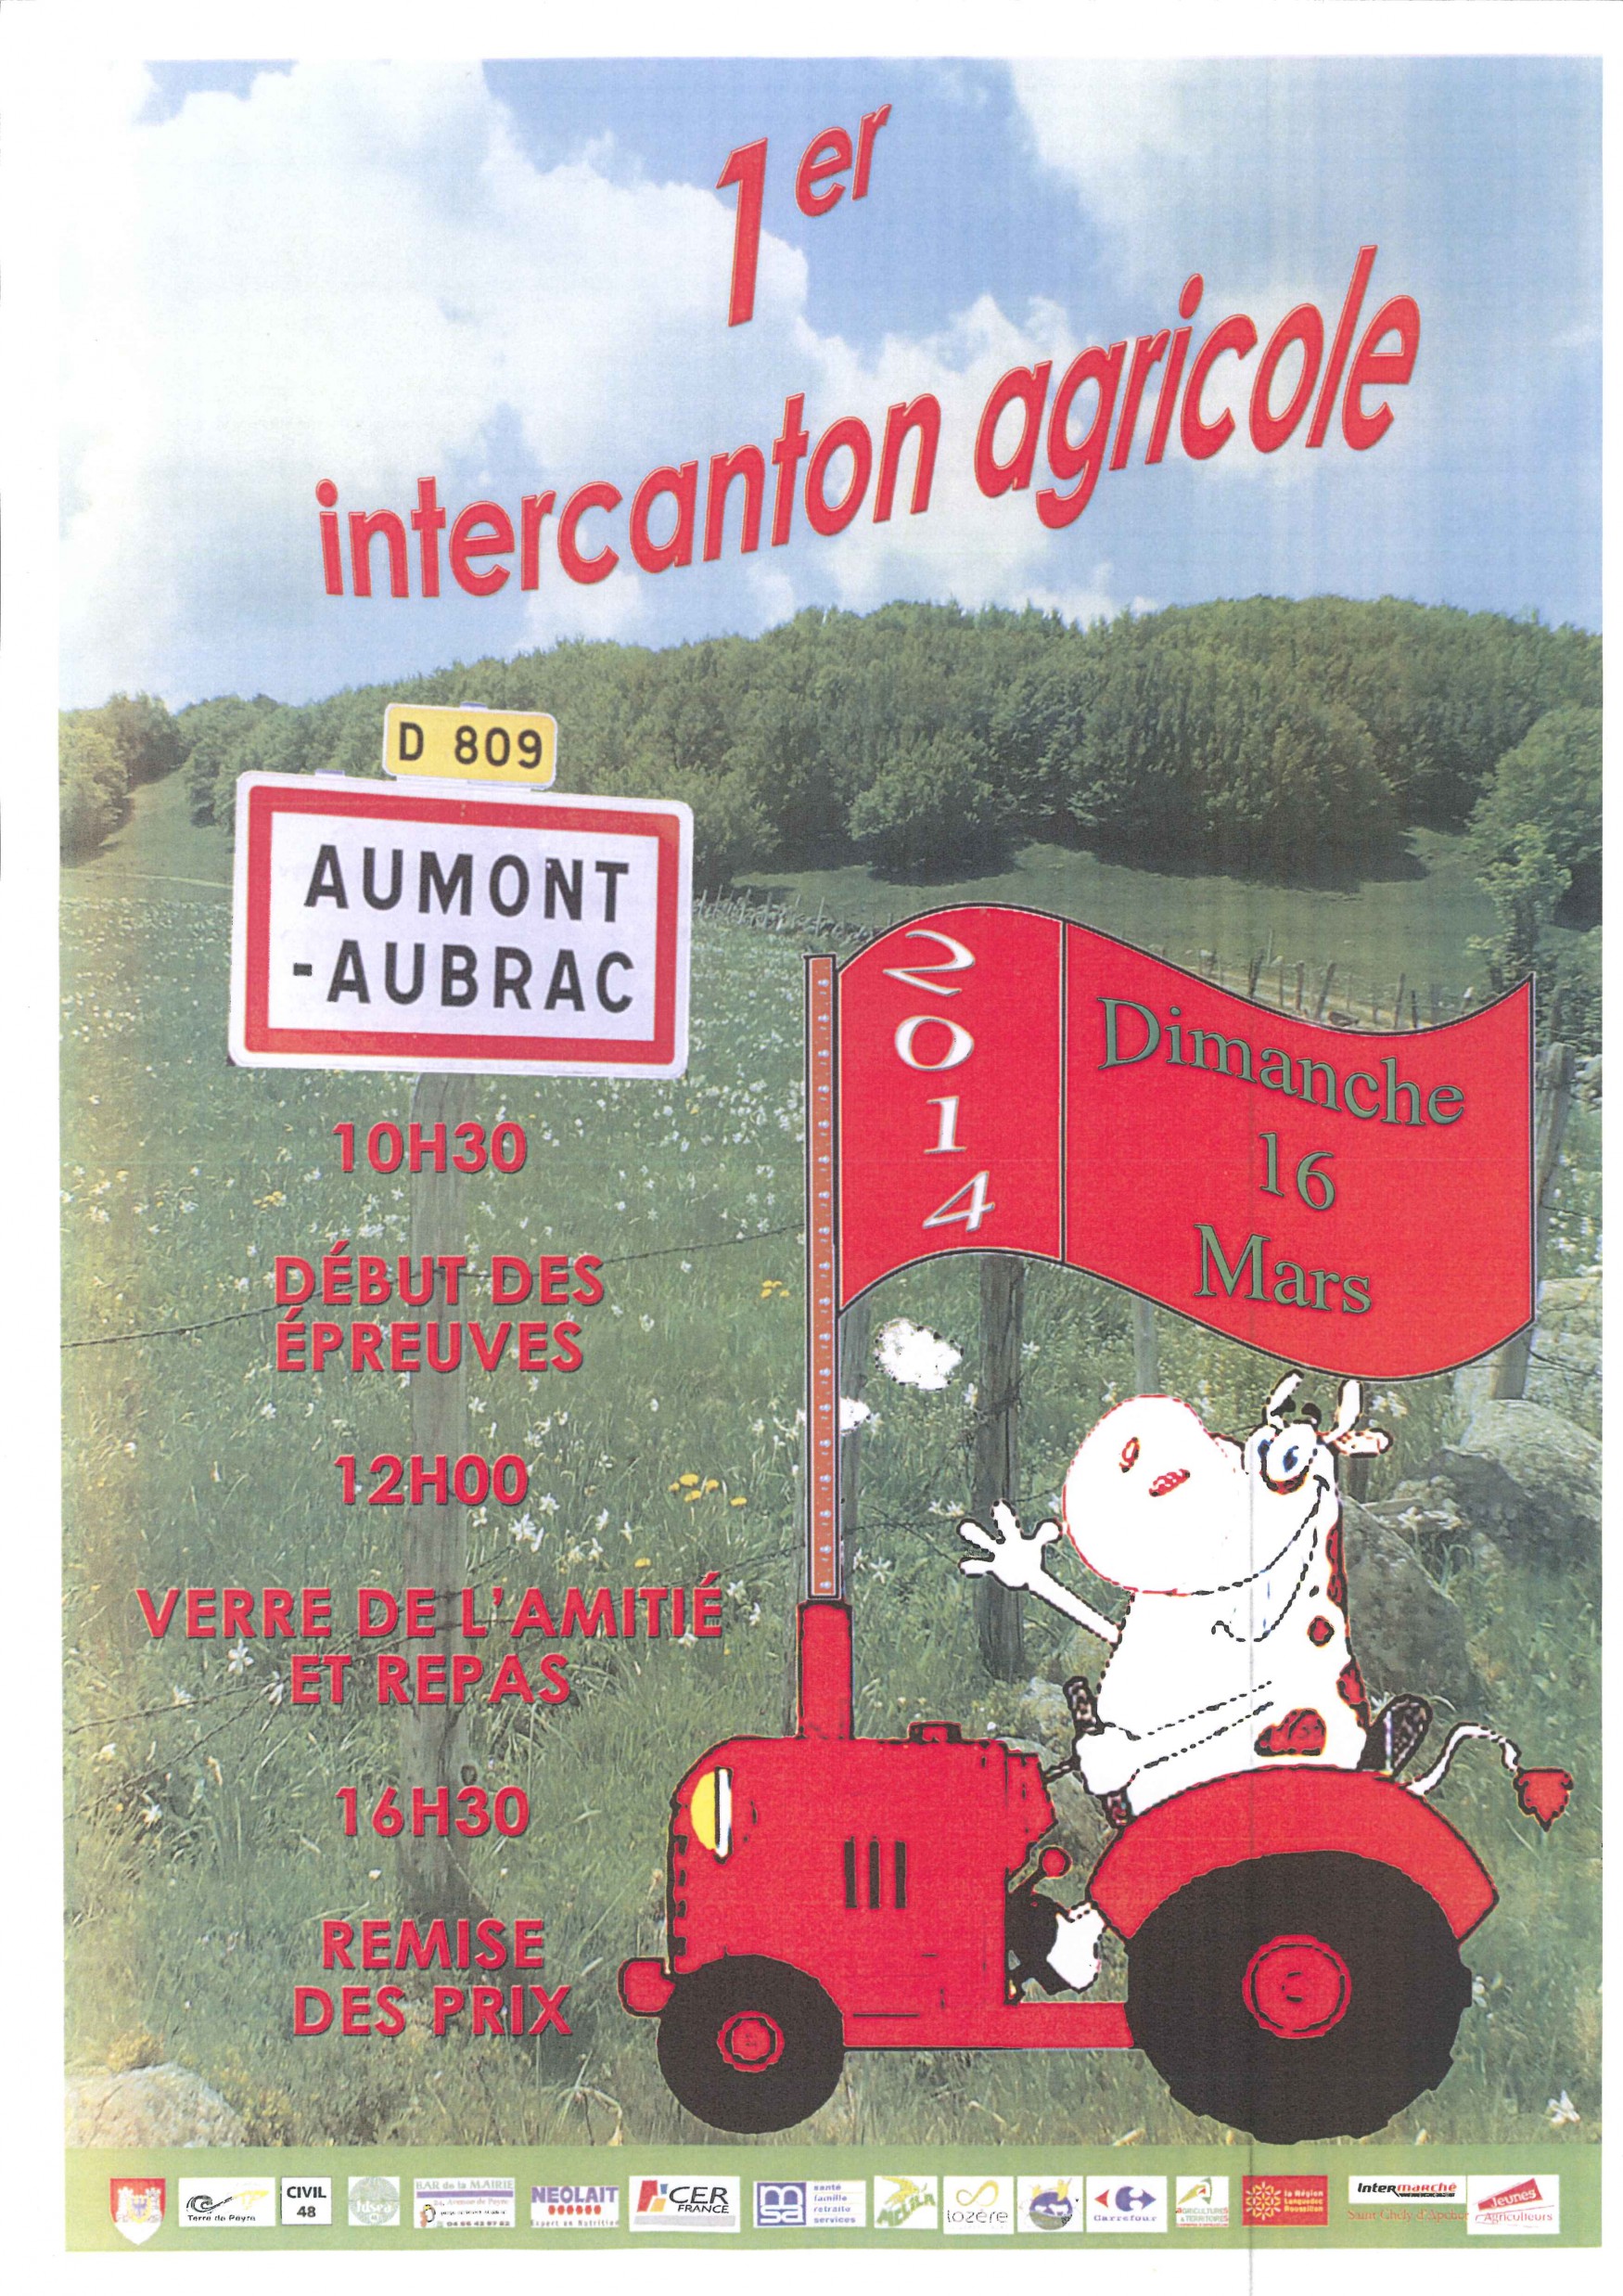 INTERCANTON AGRICOLE post thumbnail image